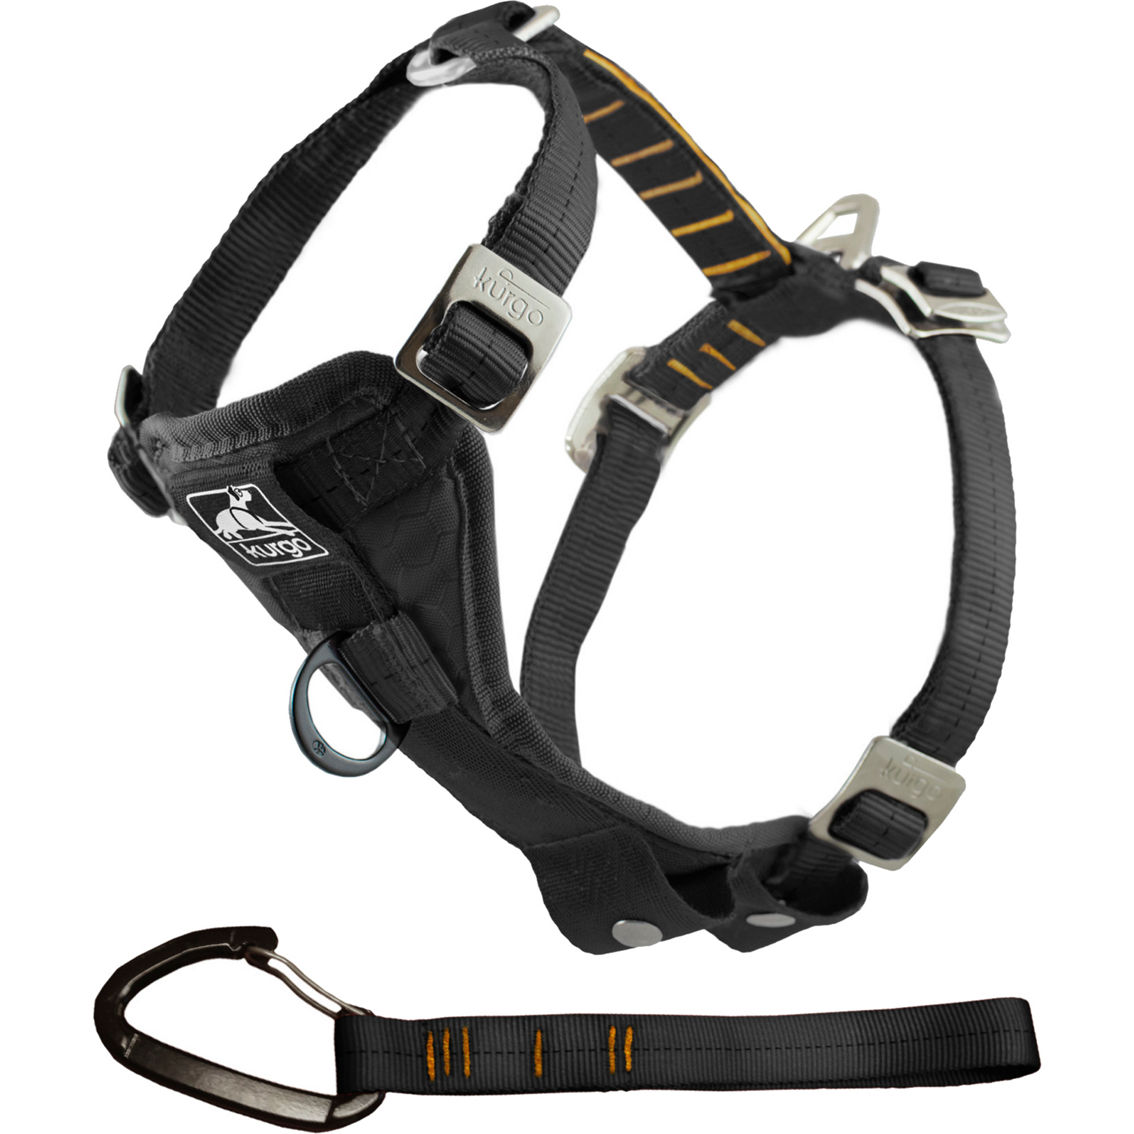 Kurgo Tru-Fit Smart Harness, Enhanced Strength - Image 2 of 10